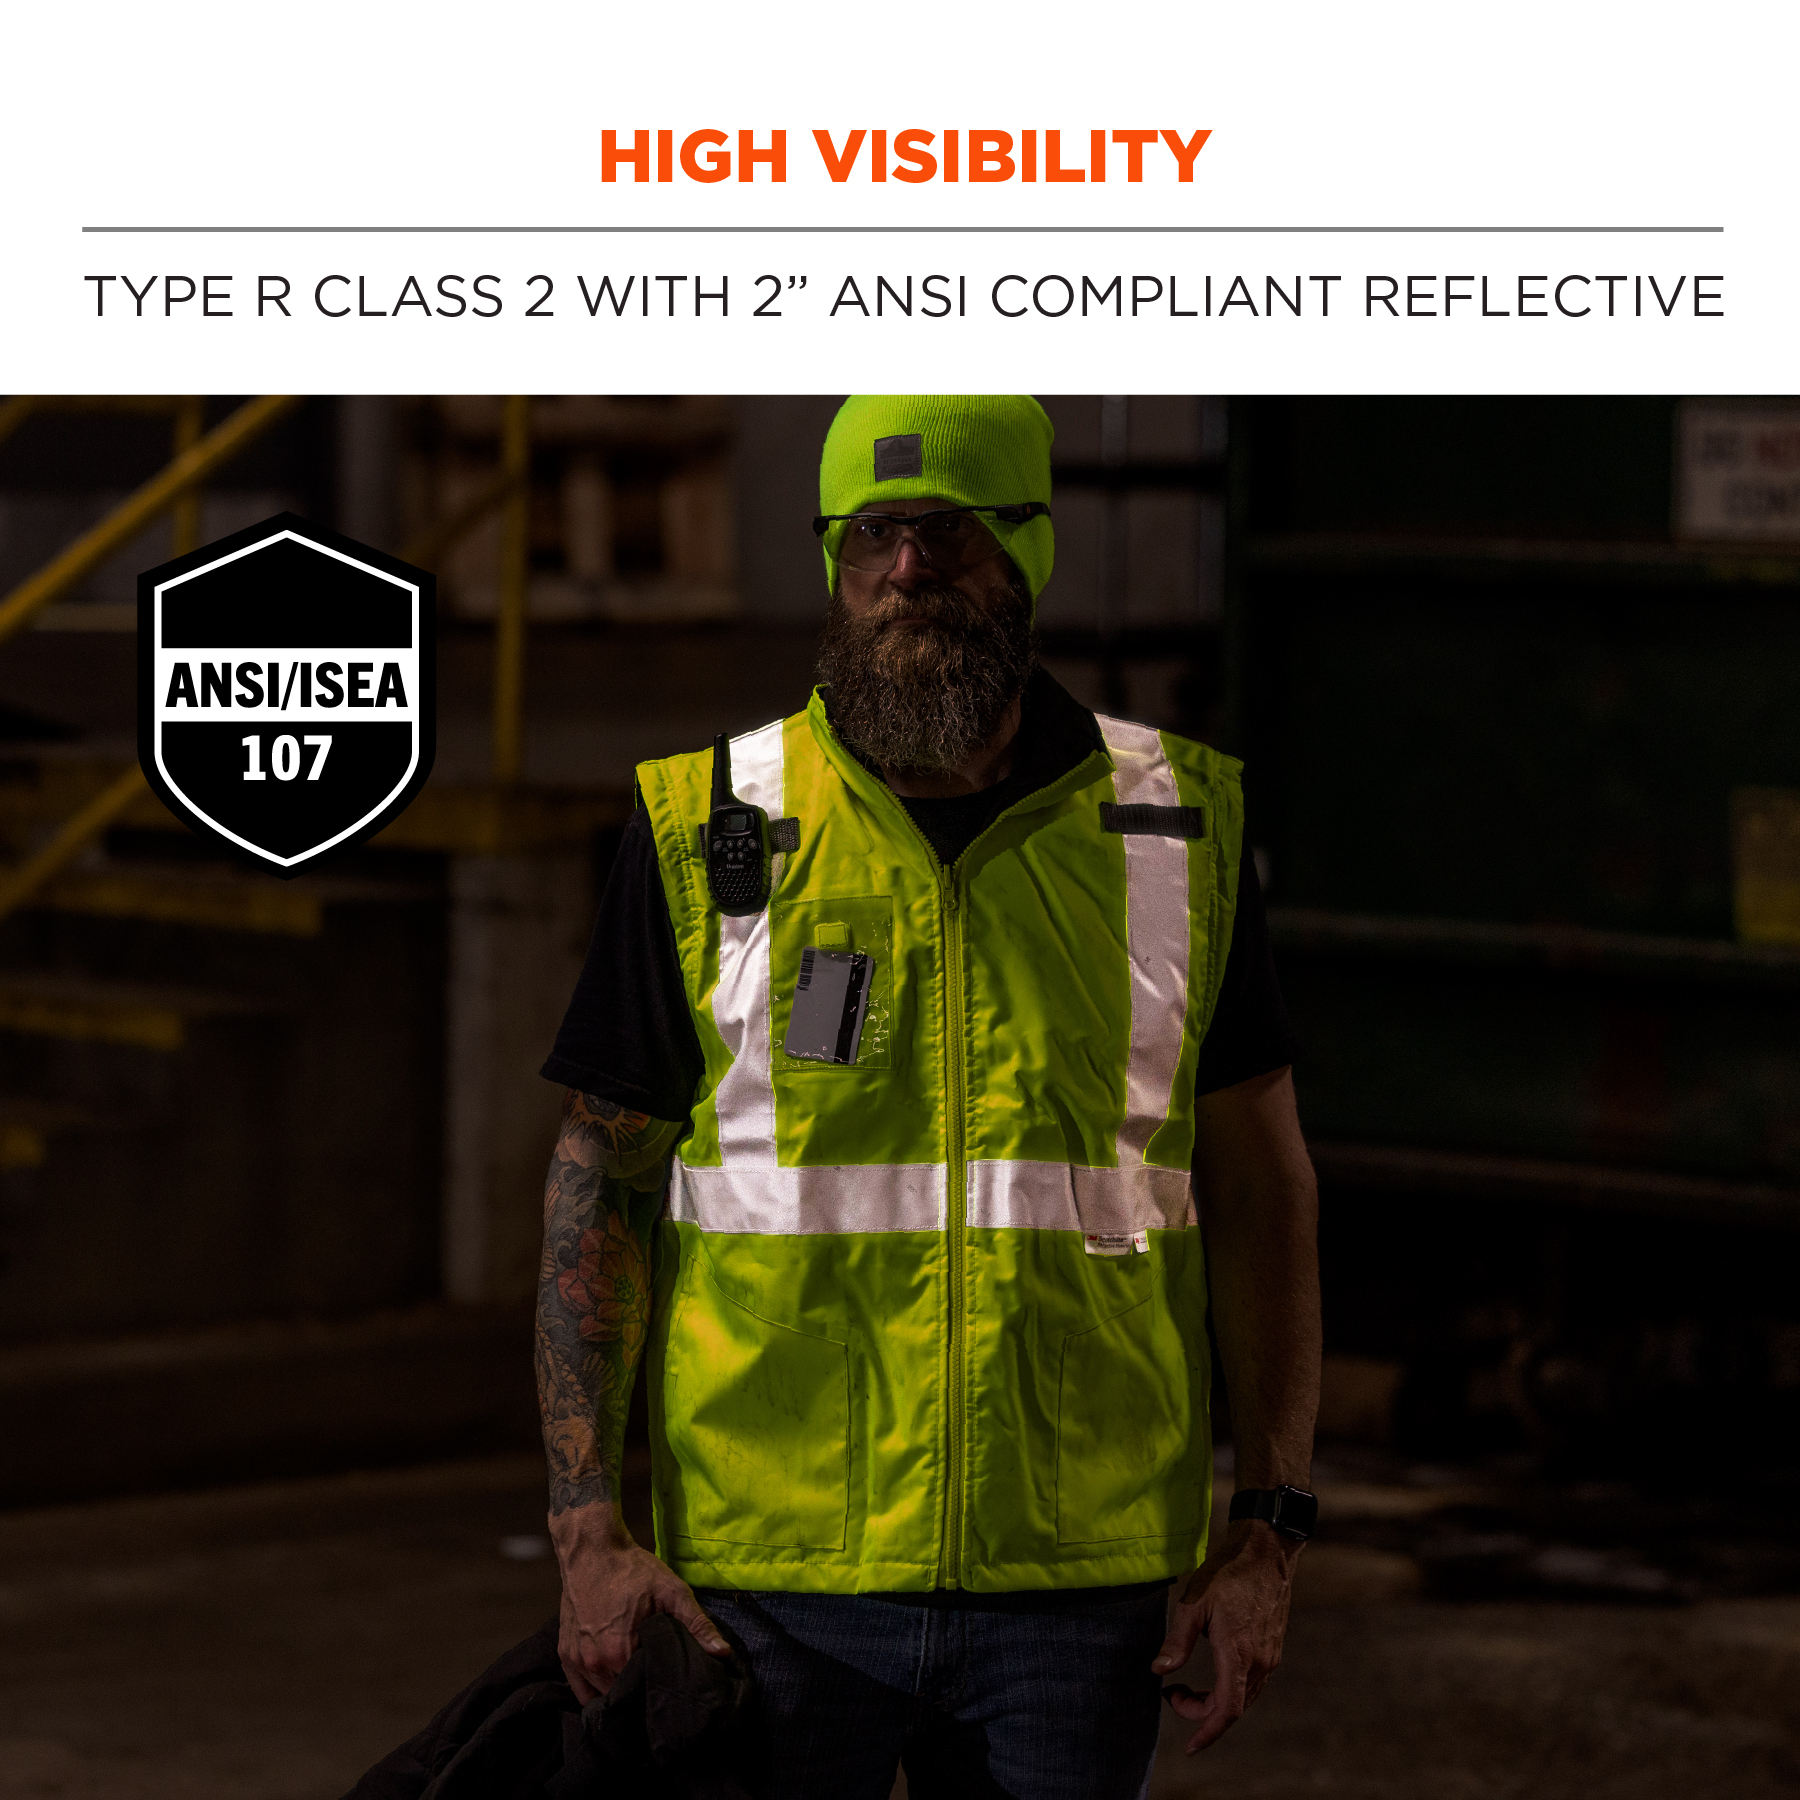 Choosing FR Vests for High Visibility